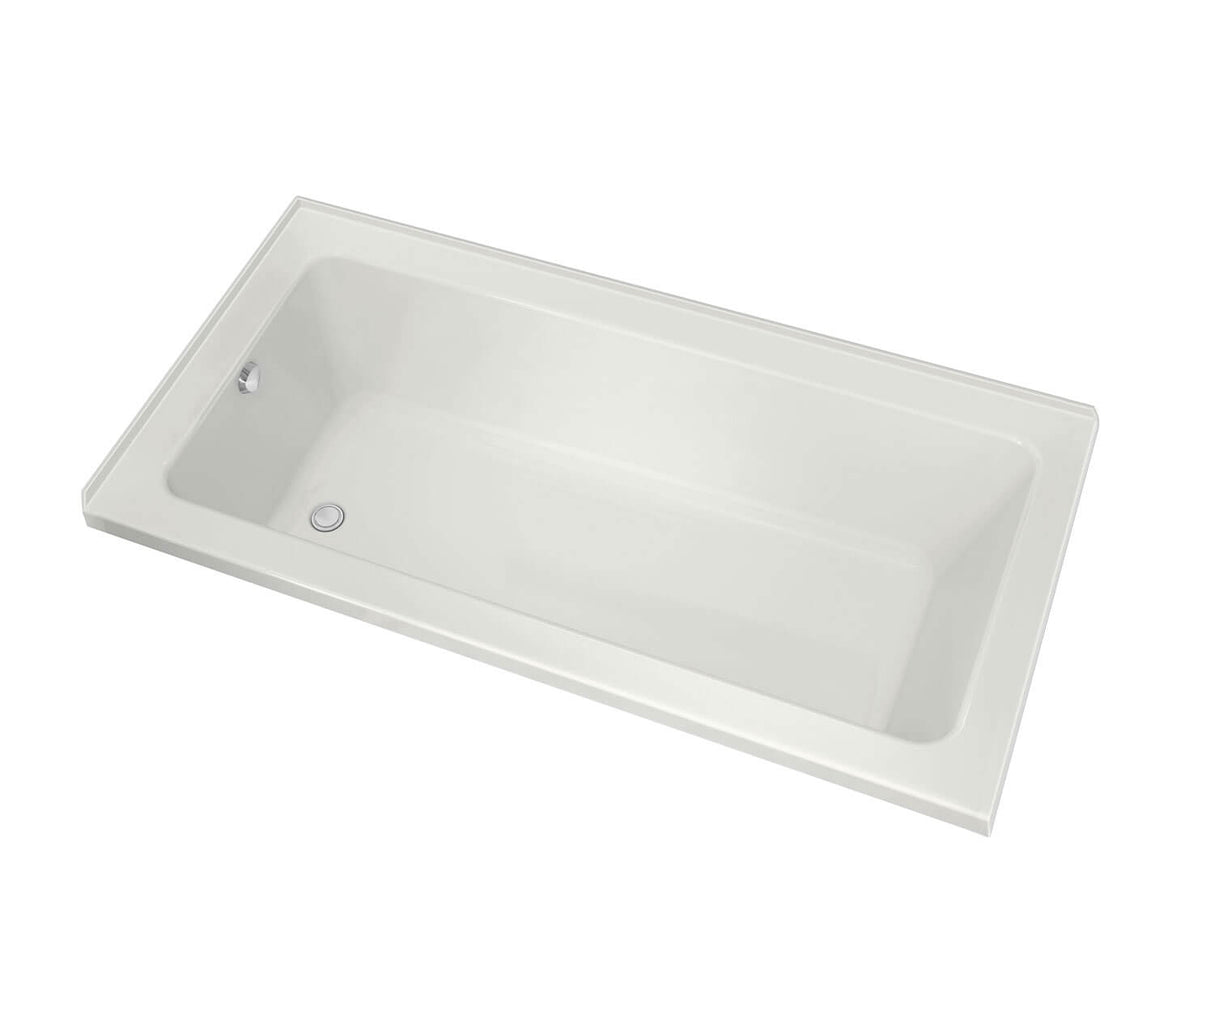 MAAX 106214-R-103-001 Pose 7242 IF Acrylic Corner Left Right-Hand Drain Aeroeffect Bathtub in White